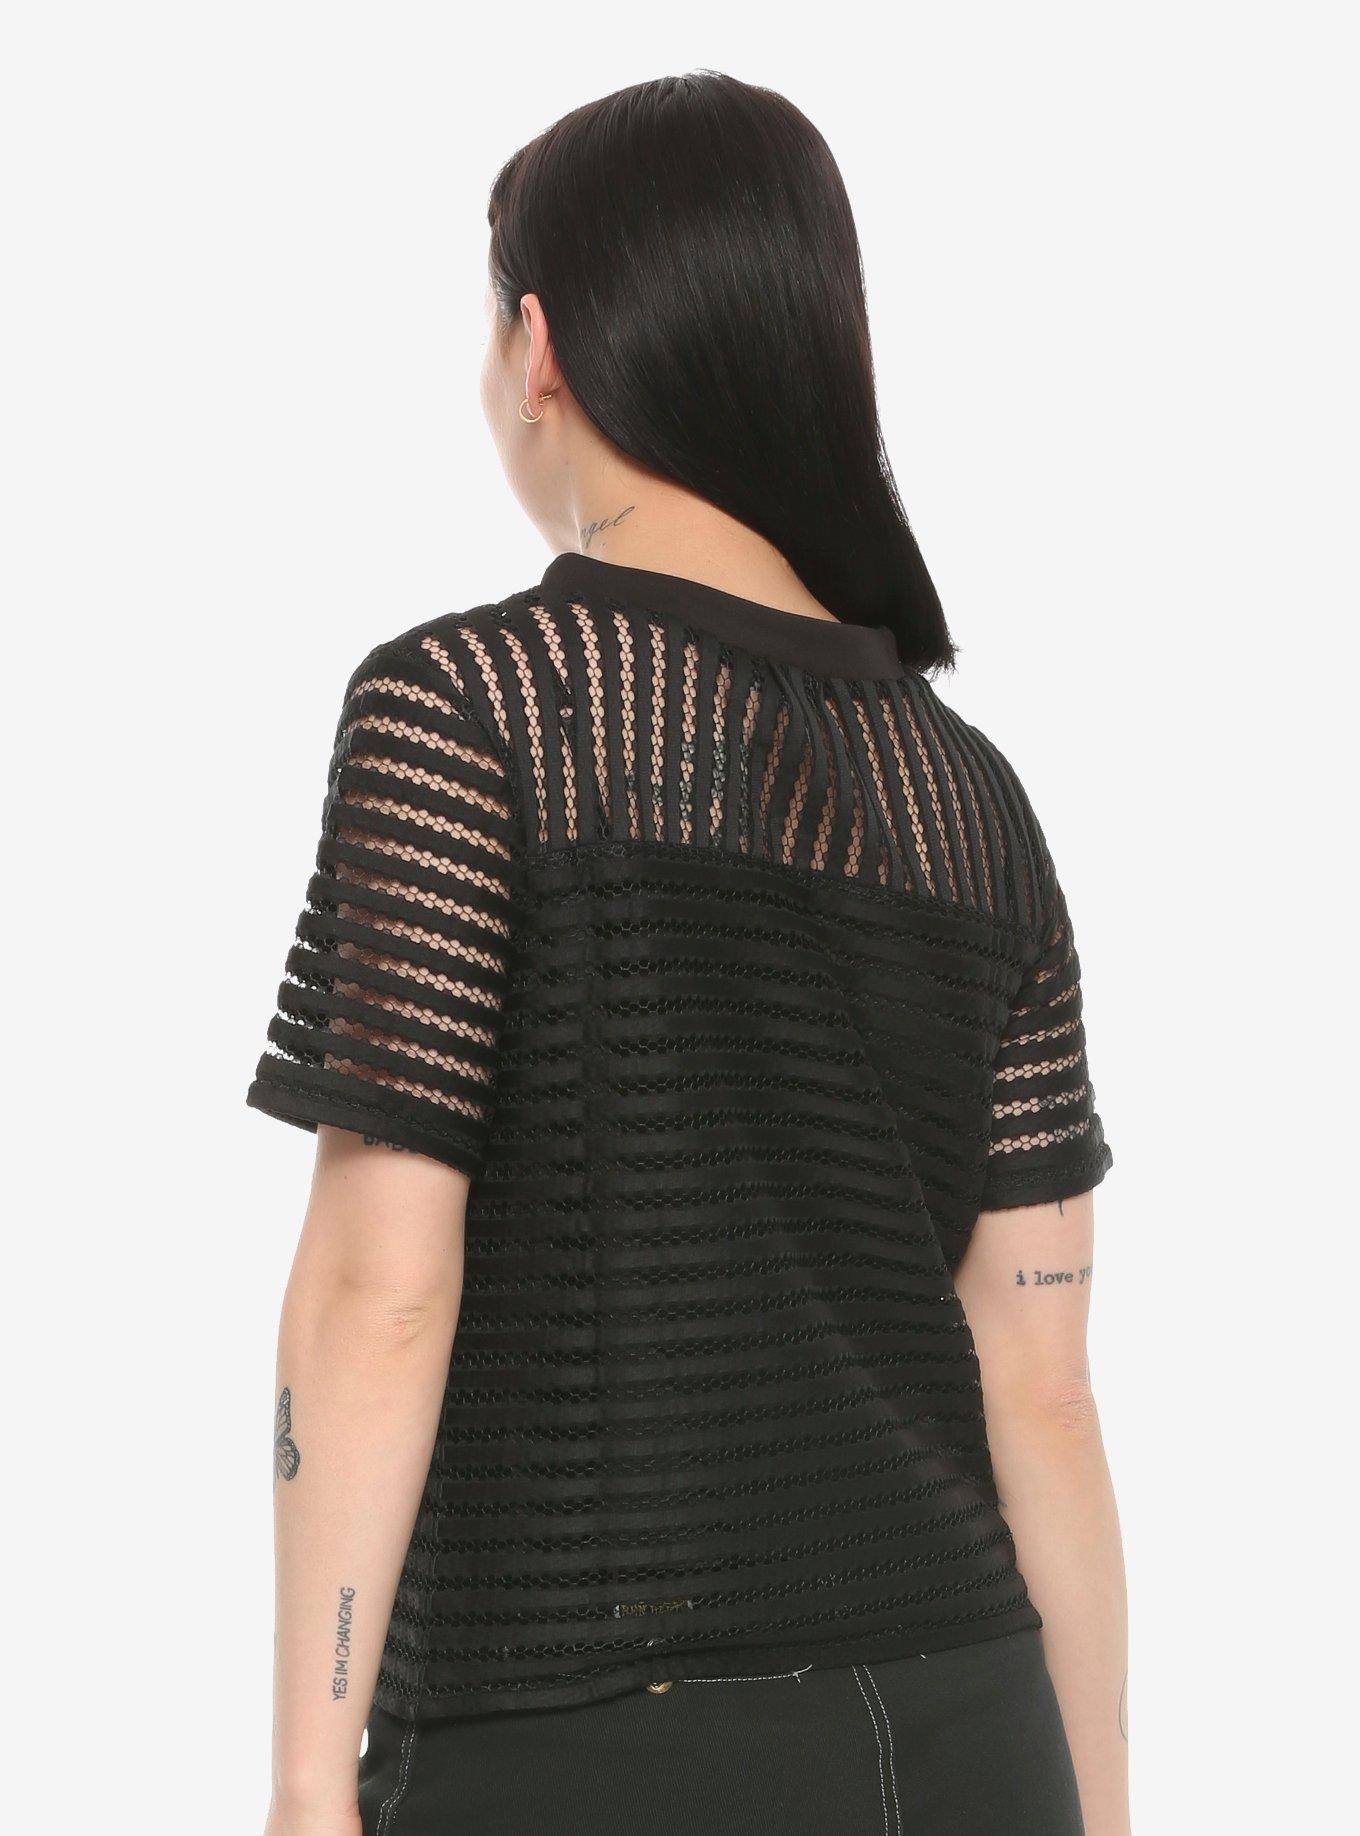 Black Striped Mesh Girls T-Shirt, BLACK, alternate